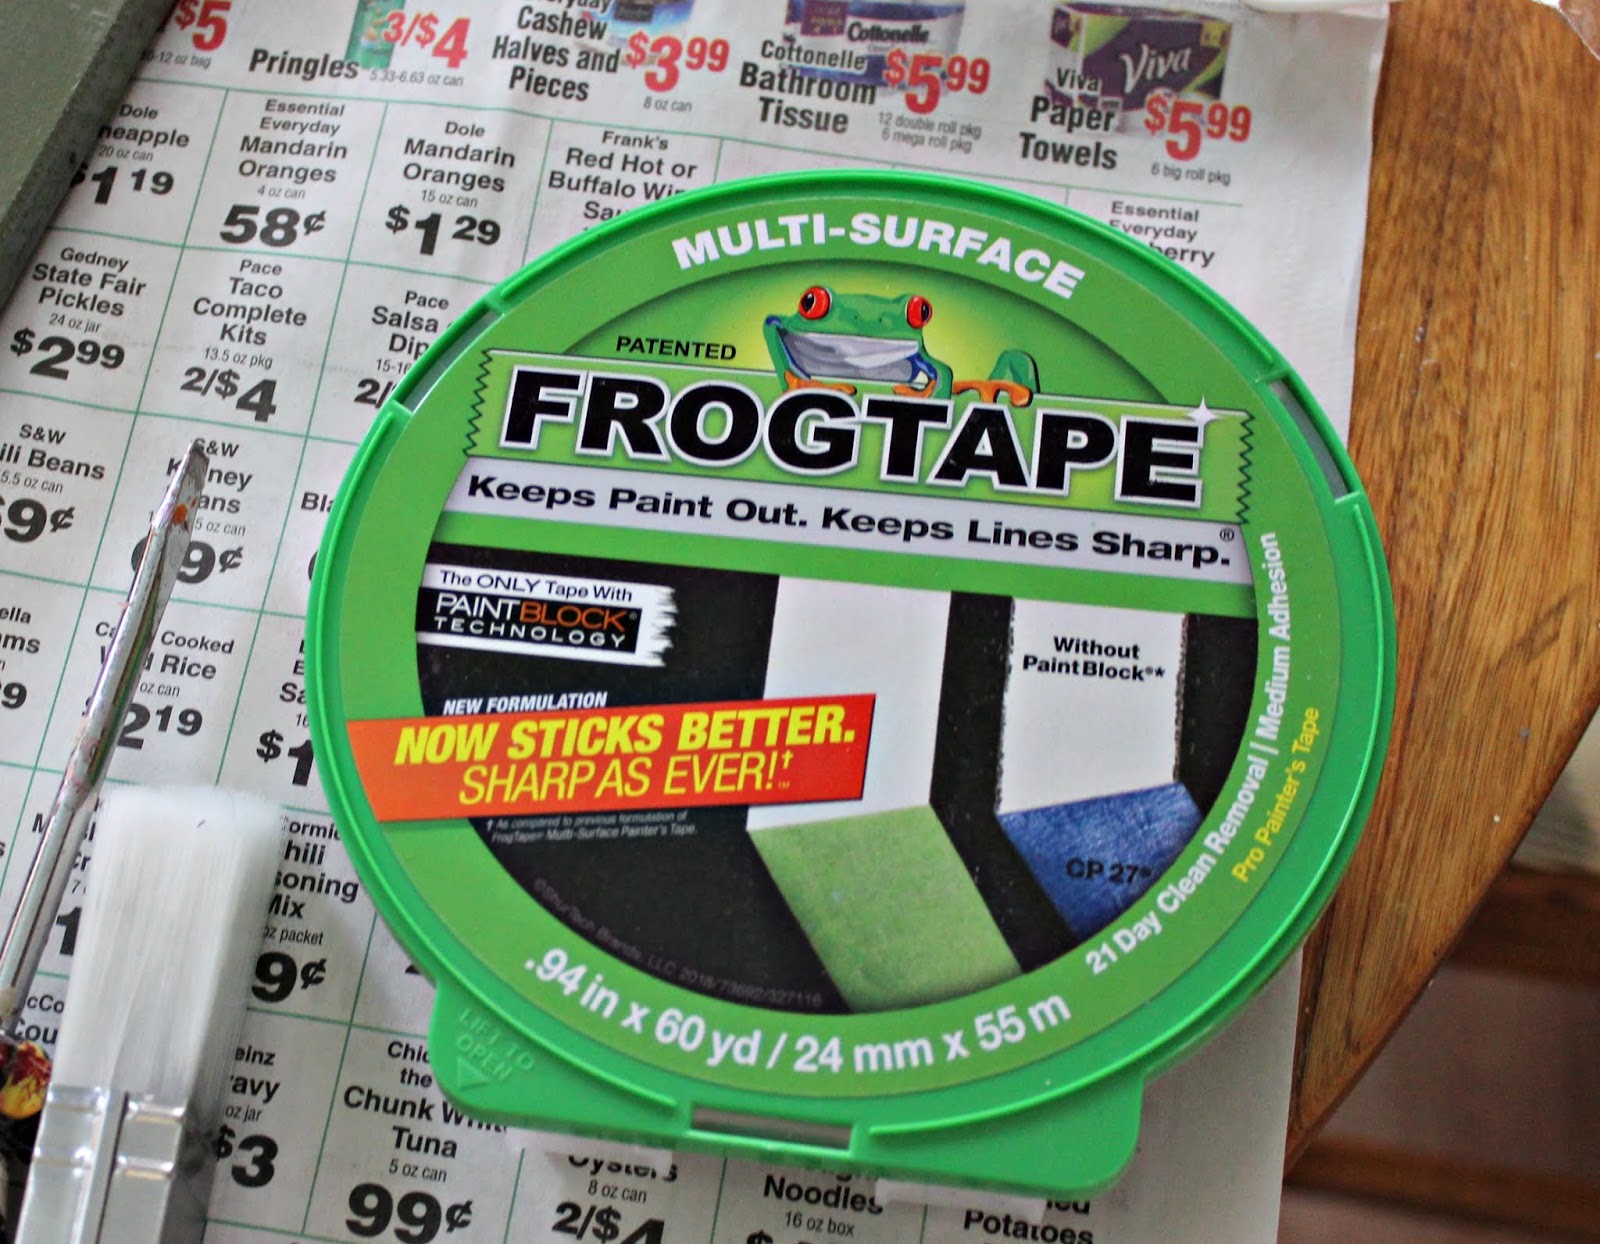 Frogtape Multi-Surface Painter's Tape, Hobby Lobby